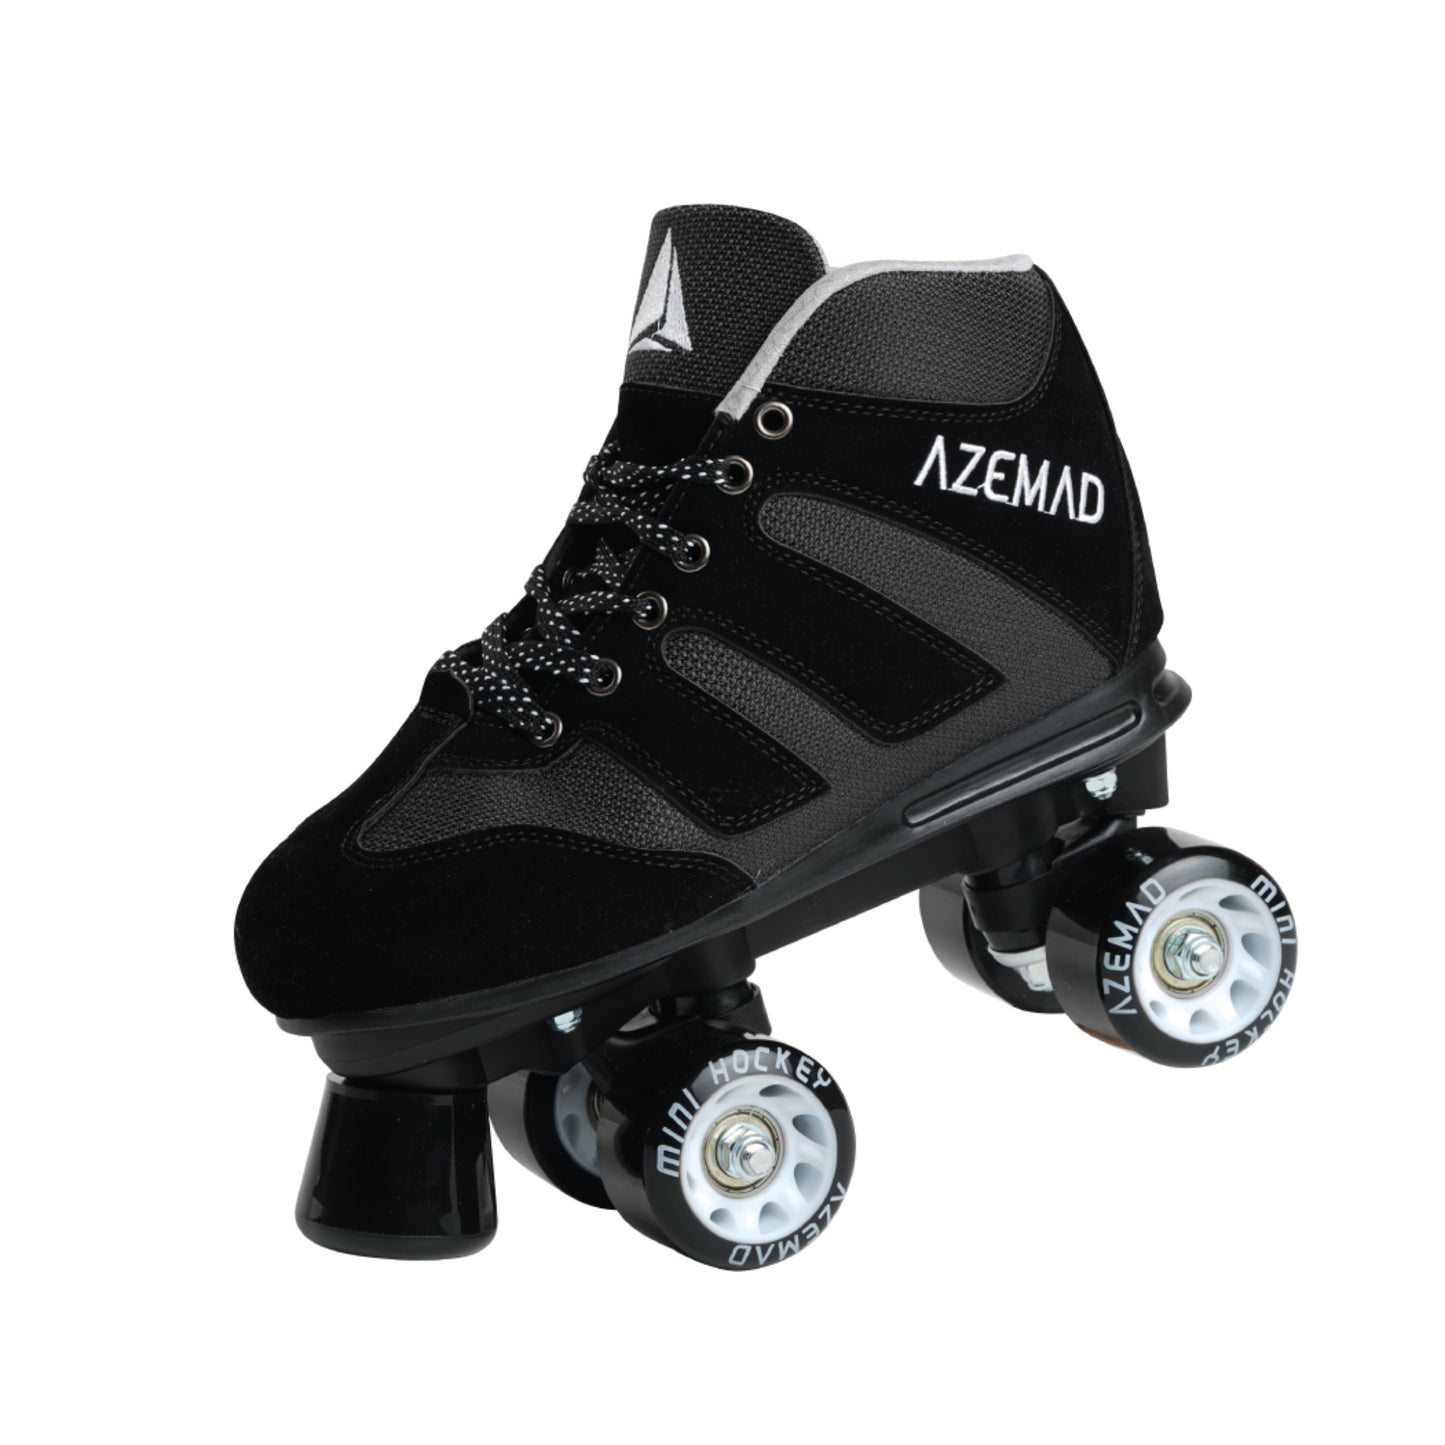 AZEMAD ECLIPSE MINI Complete Skates